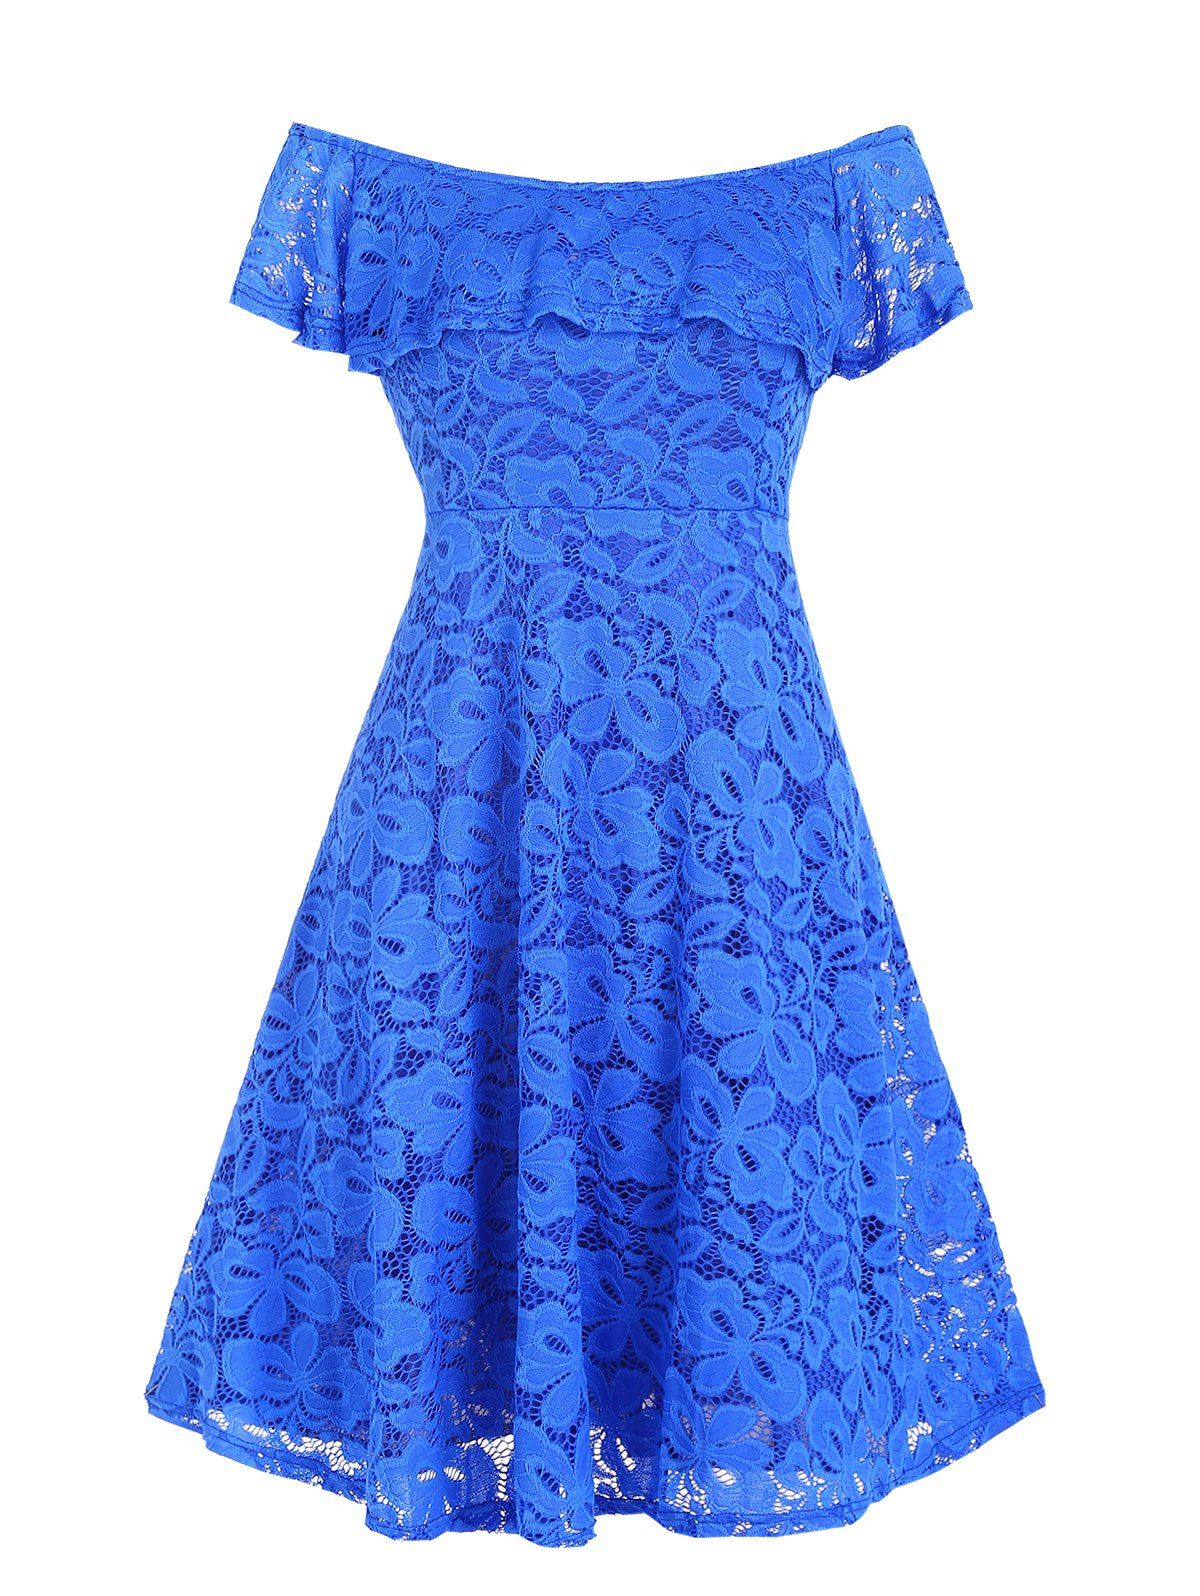 Sweet Lace Off The Shoulder Flounce A Line Cocktail Party Dress - BLUE XL